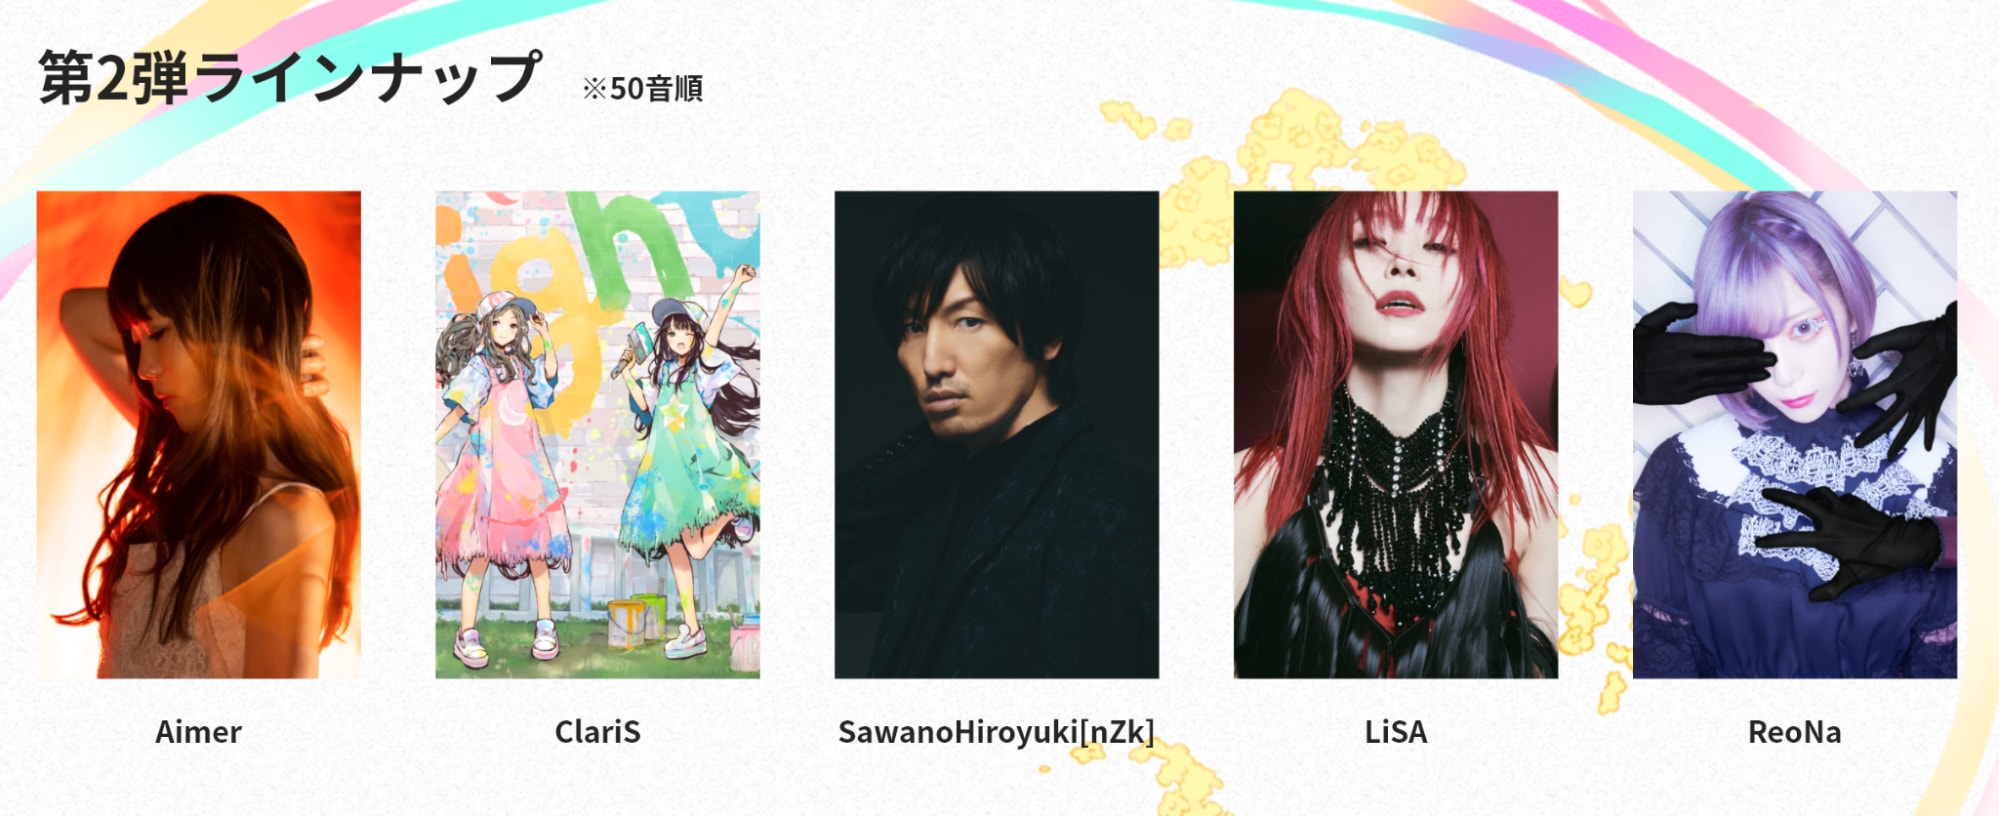 Aniplex Online Fest - artist line-up